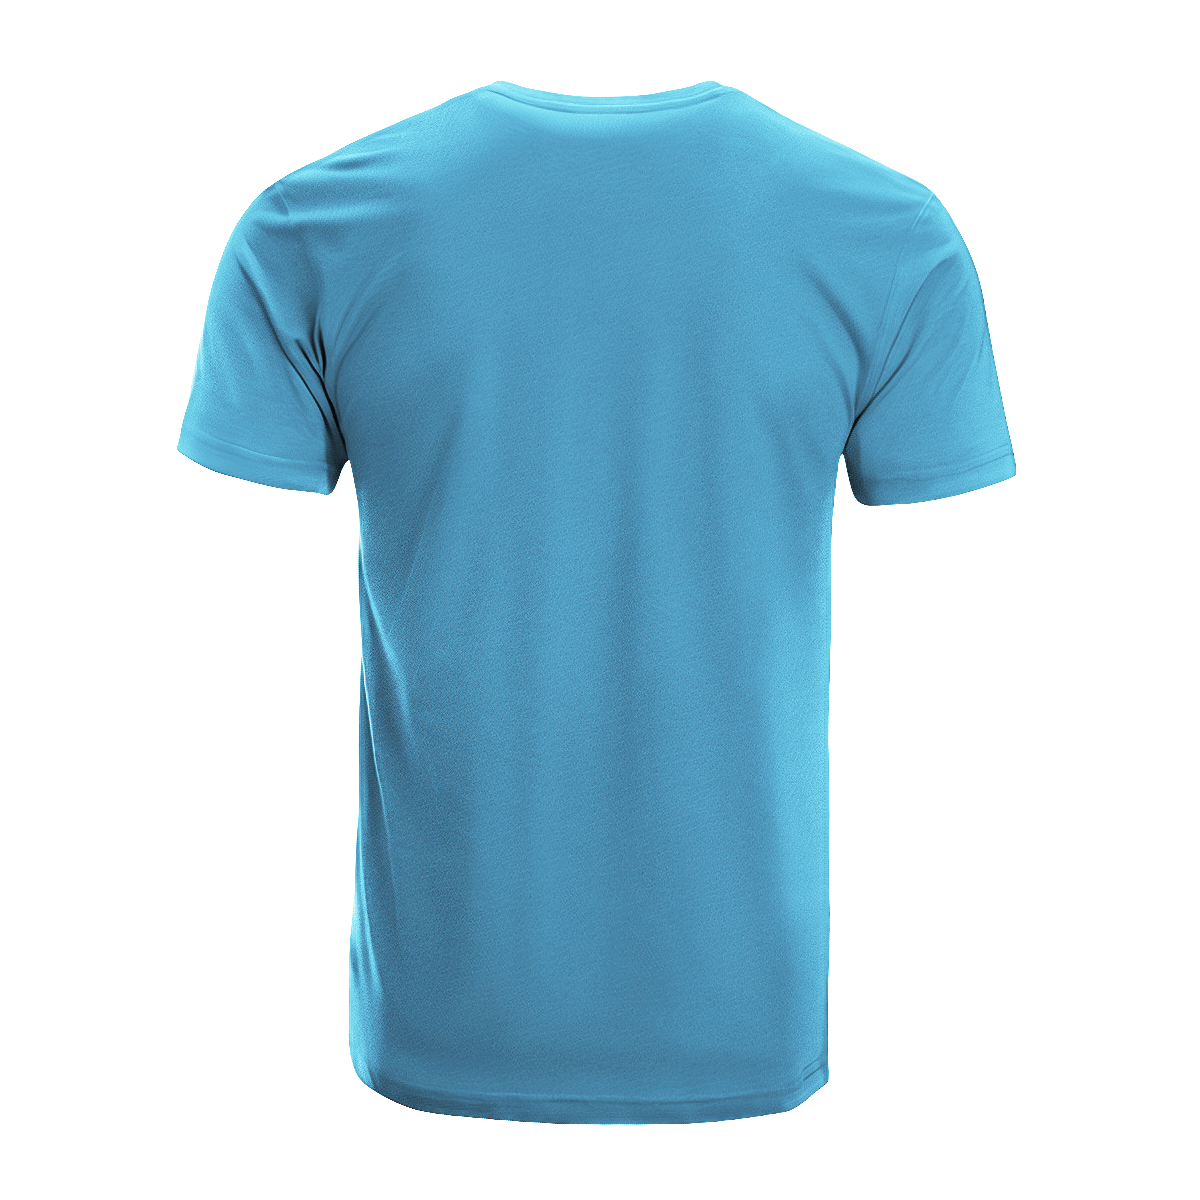 MacFarlane Tartan Crest T-shirt - I'm not yelling style